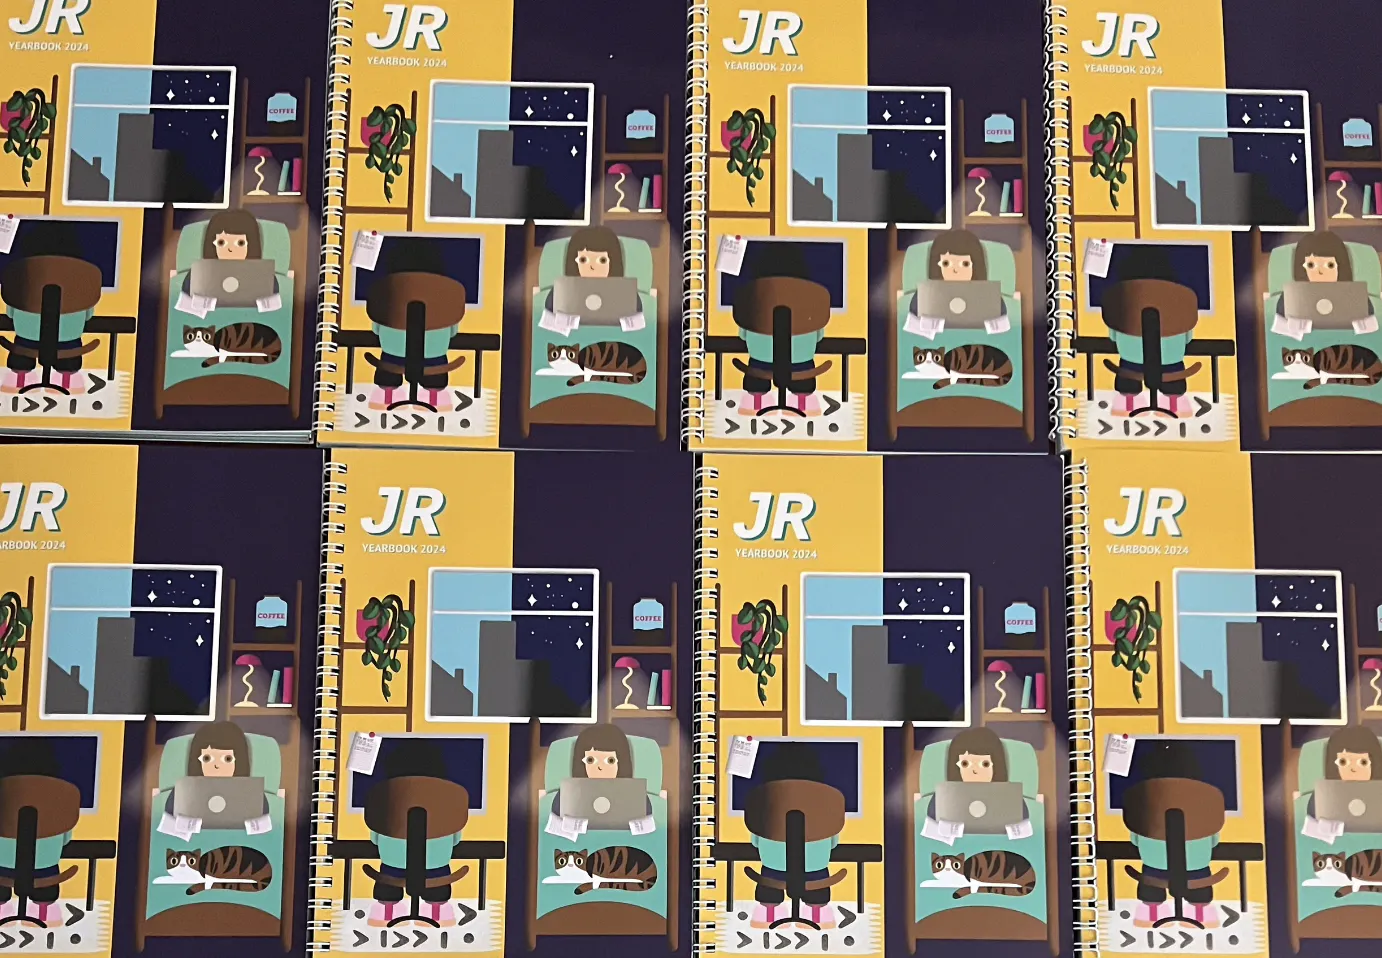 Eight JR magazines laid flat